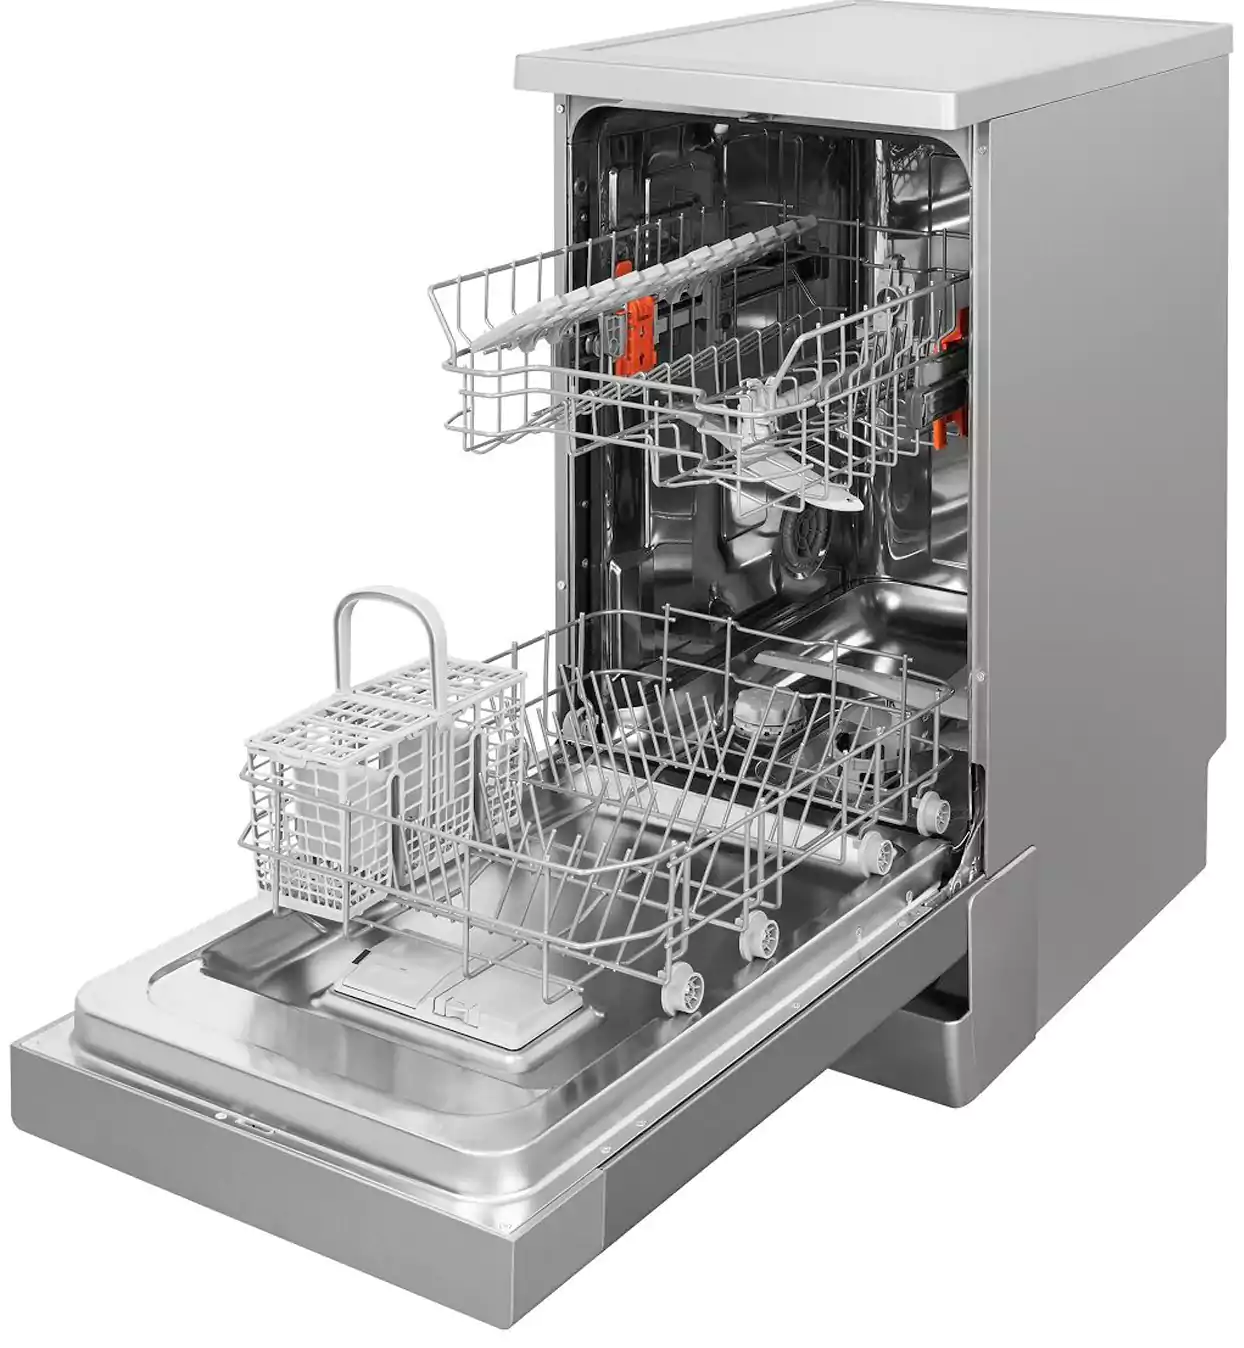 Ariston Dishwasher, 10 Place Settings, 45 cm, 5 Programs, Silver, LSFE 1B19 S